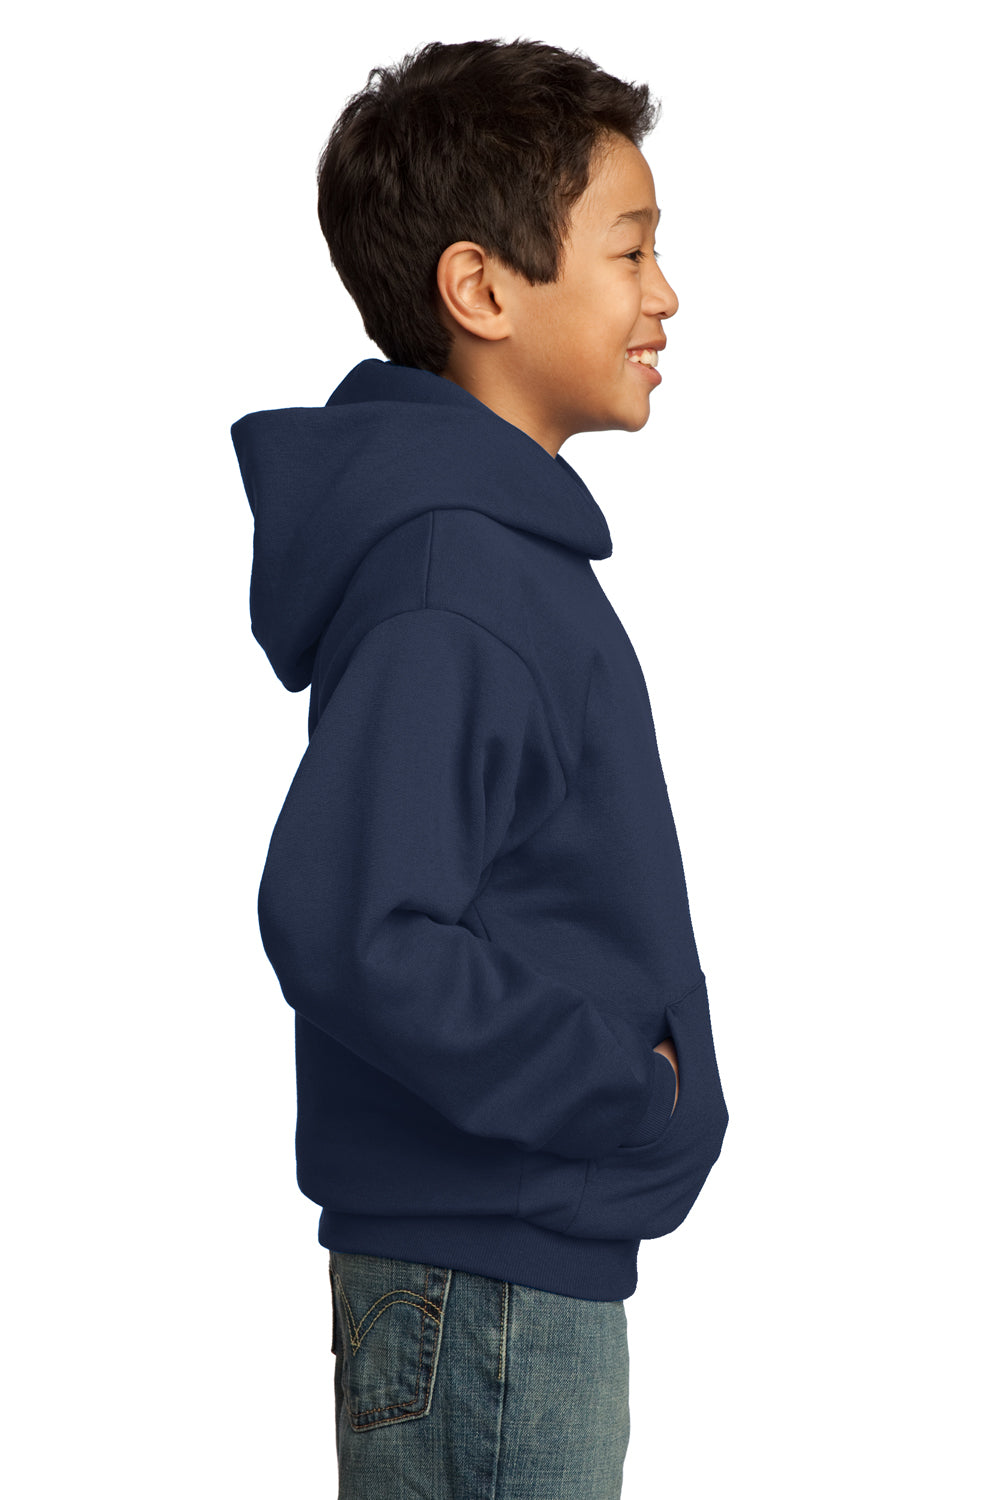 Port & Company PC90YH Youth Core Fleece Hooded Sweatshirt Hoodie Navy Blue Side